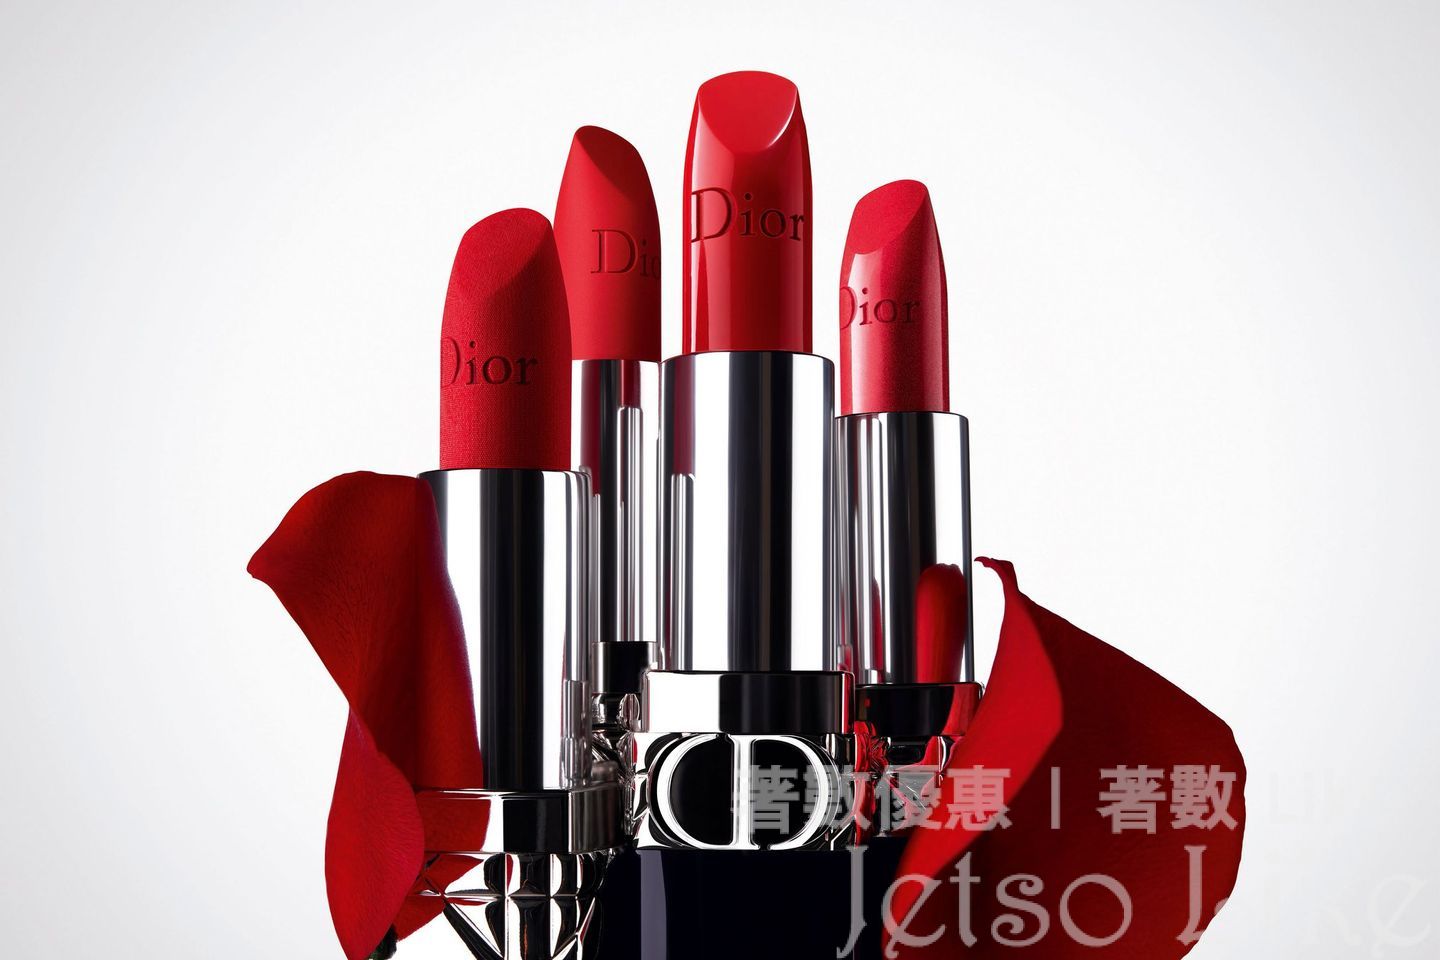 Dior Beauty 體驗虛擬試妝 送 派對限定 Dior 美妍體驗套裝